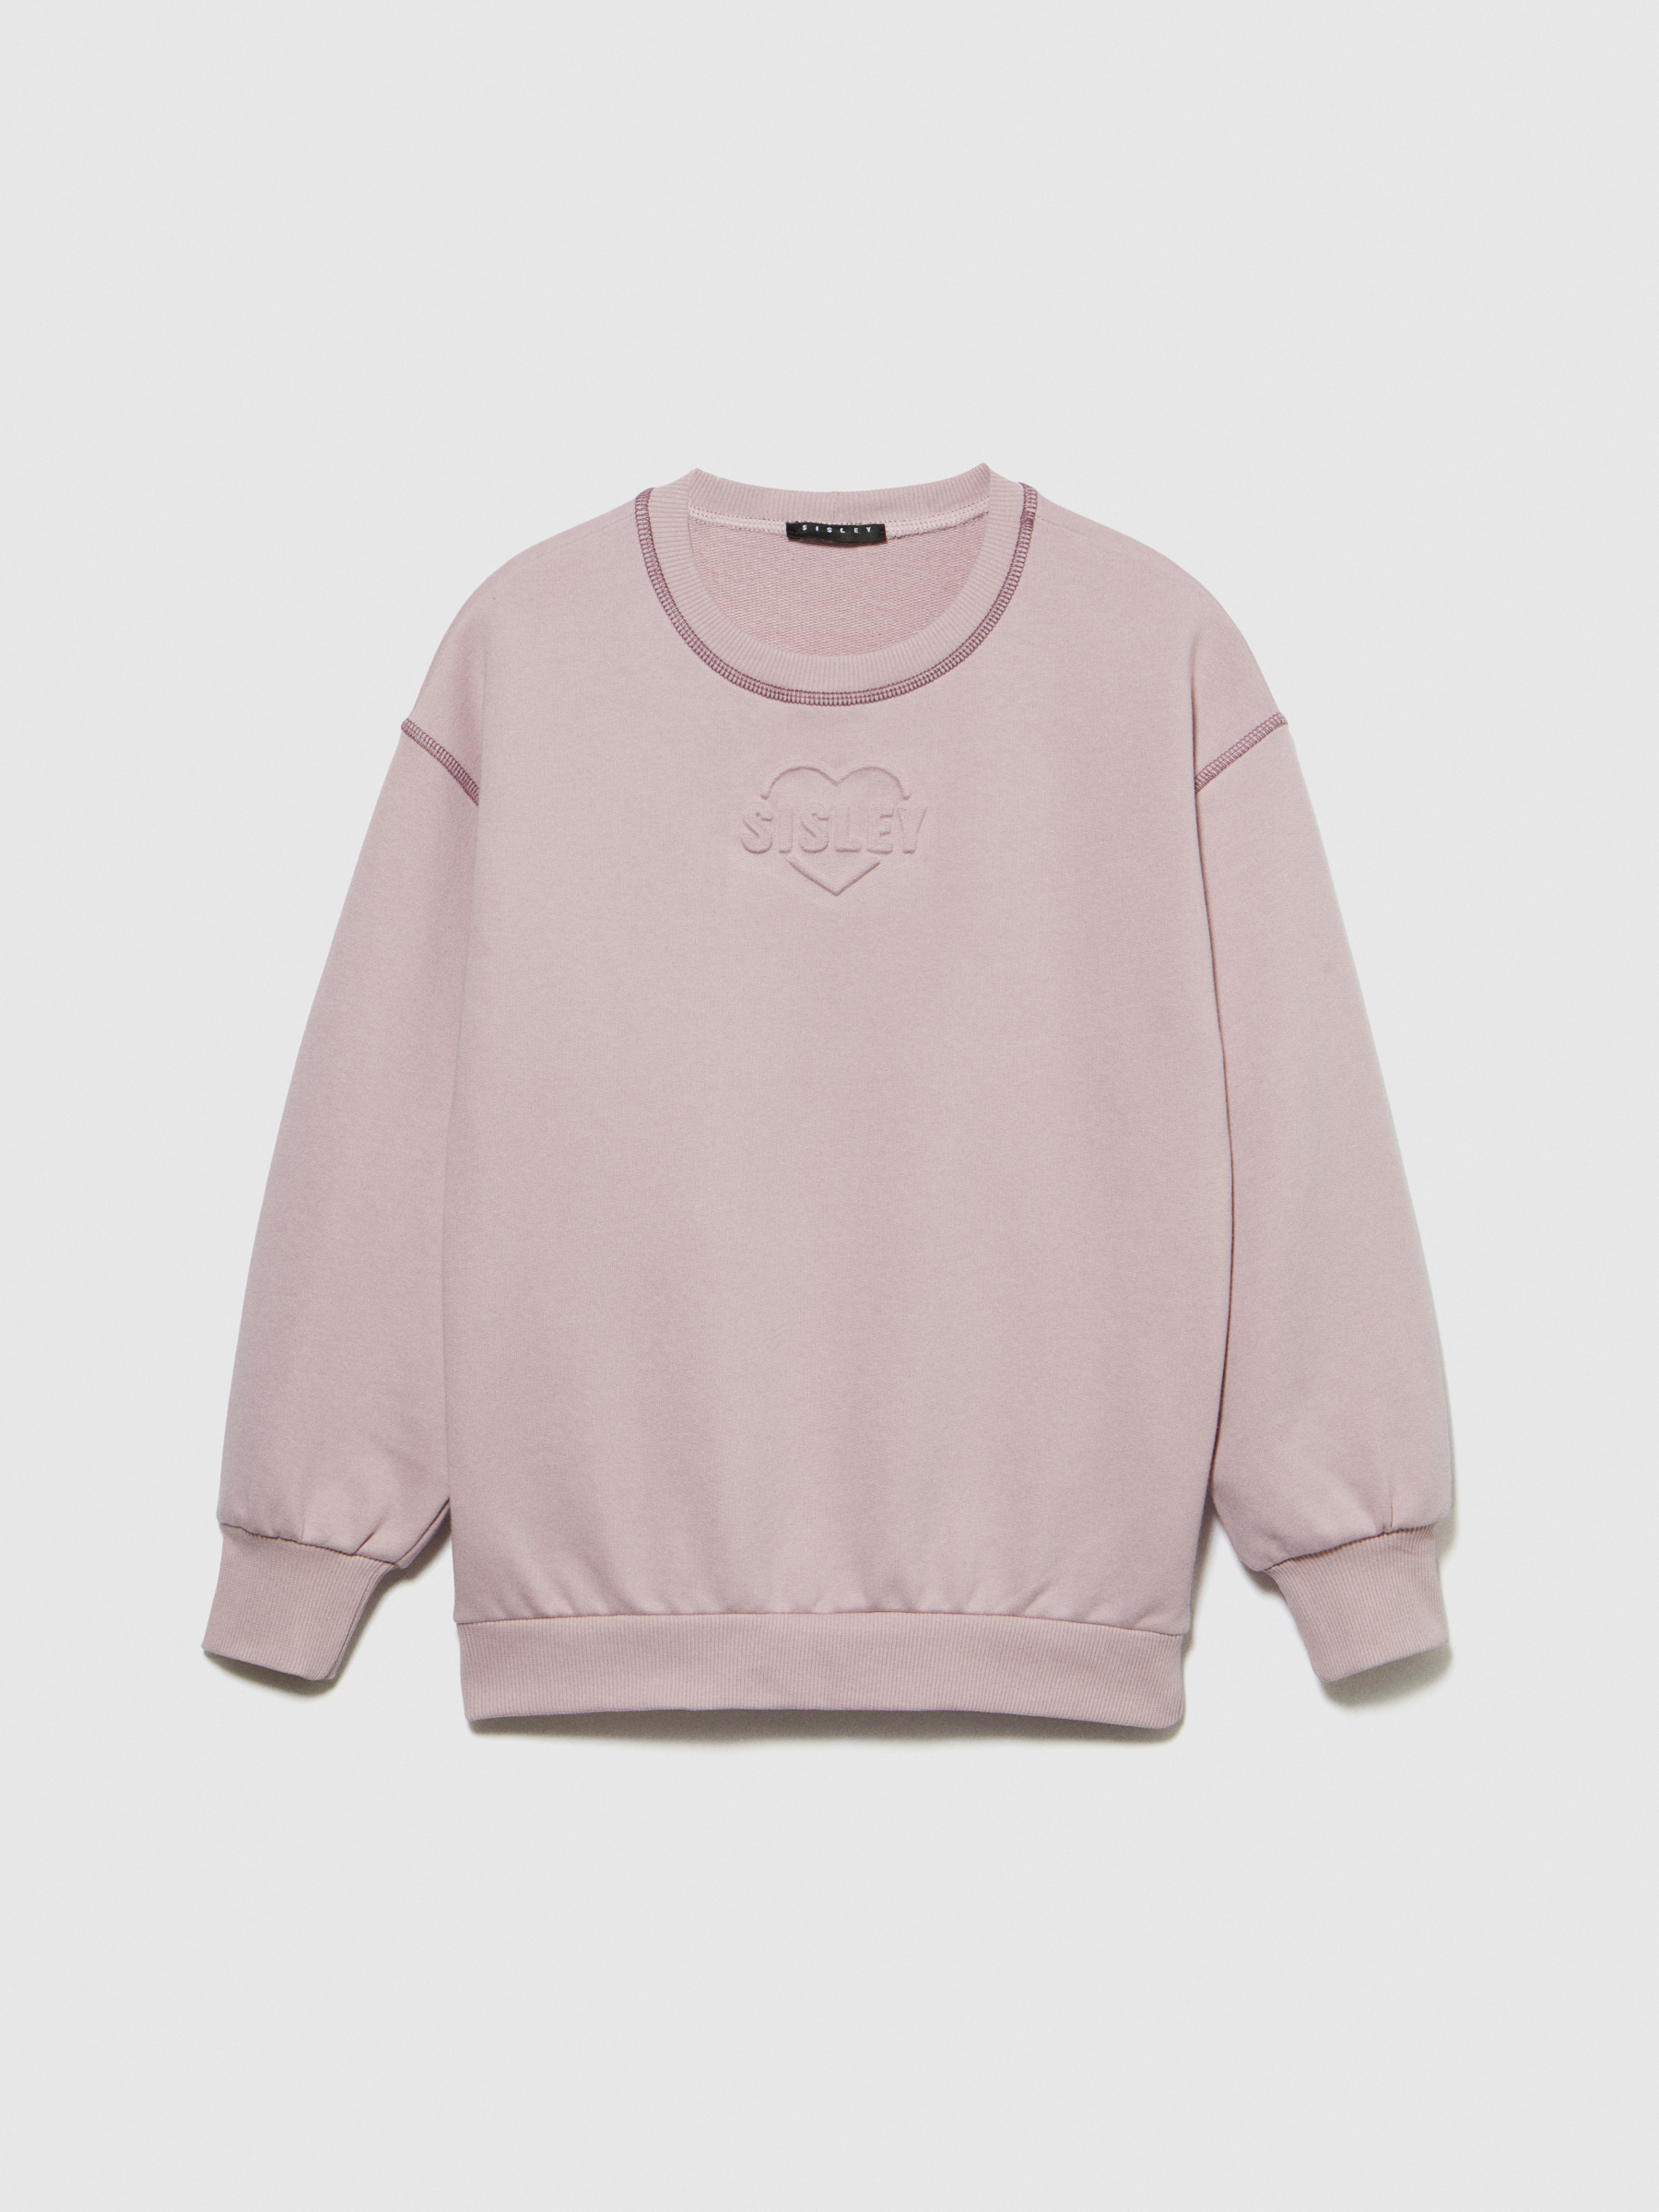 Sisley Young - Sweatshirt With Embossed Print, Woman, Pastel Pink, Size: S